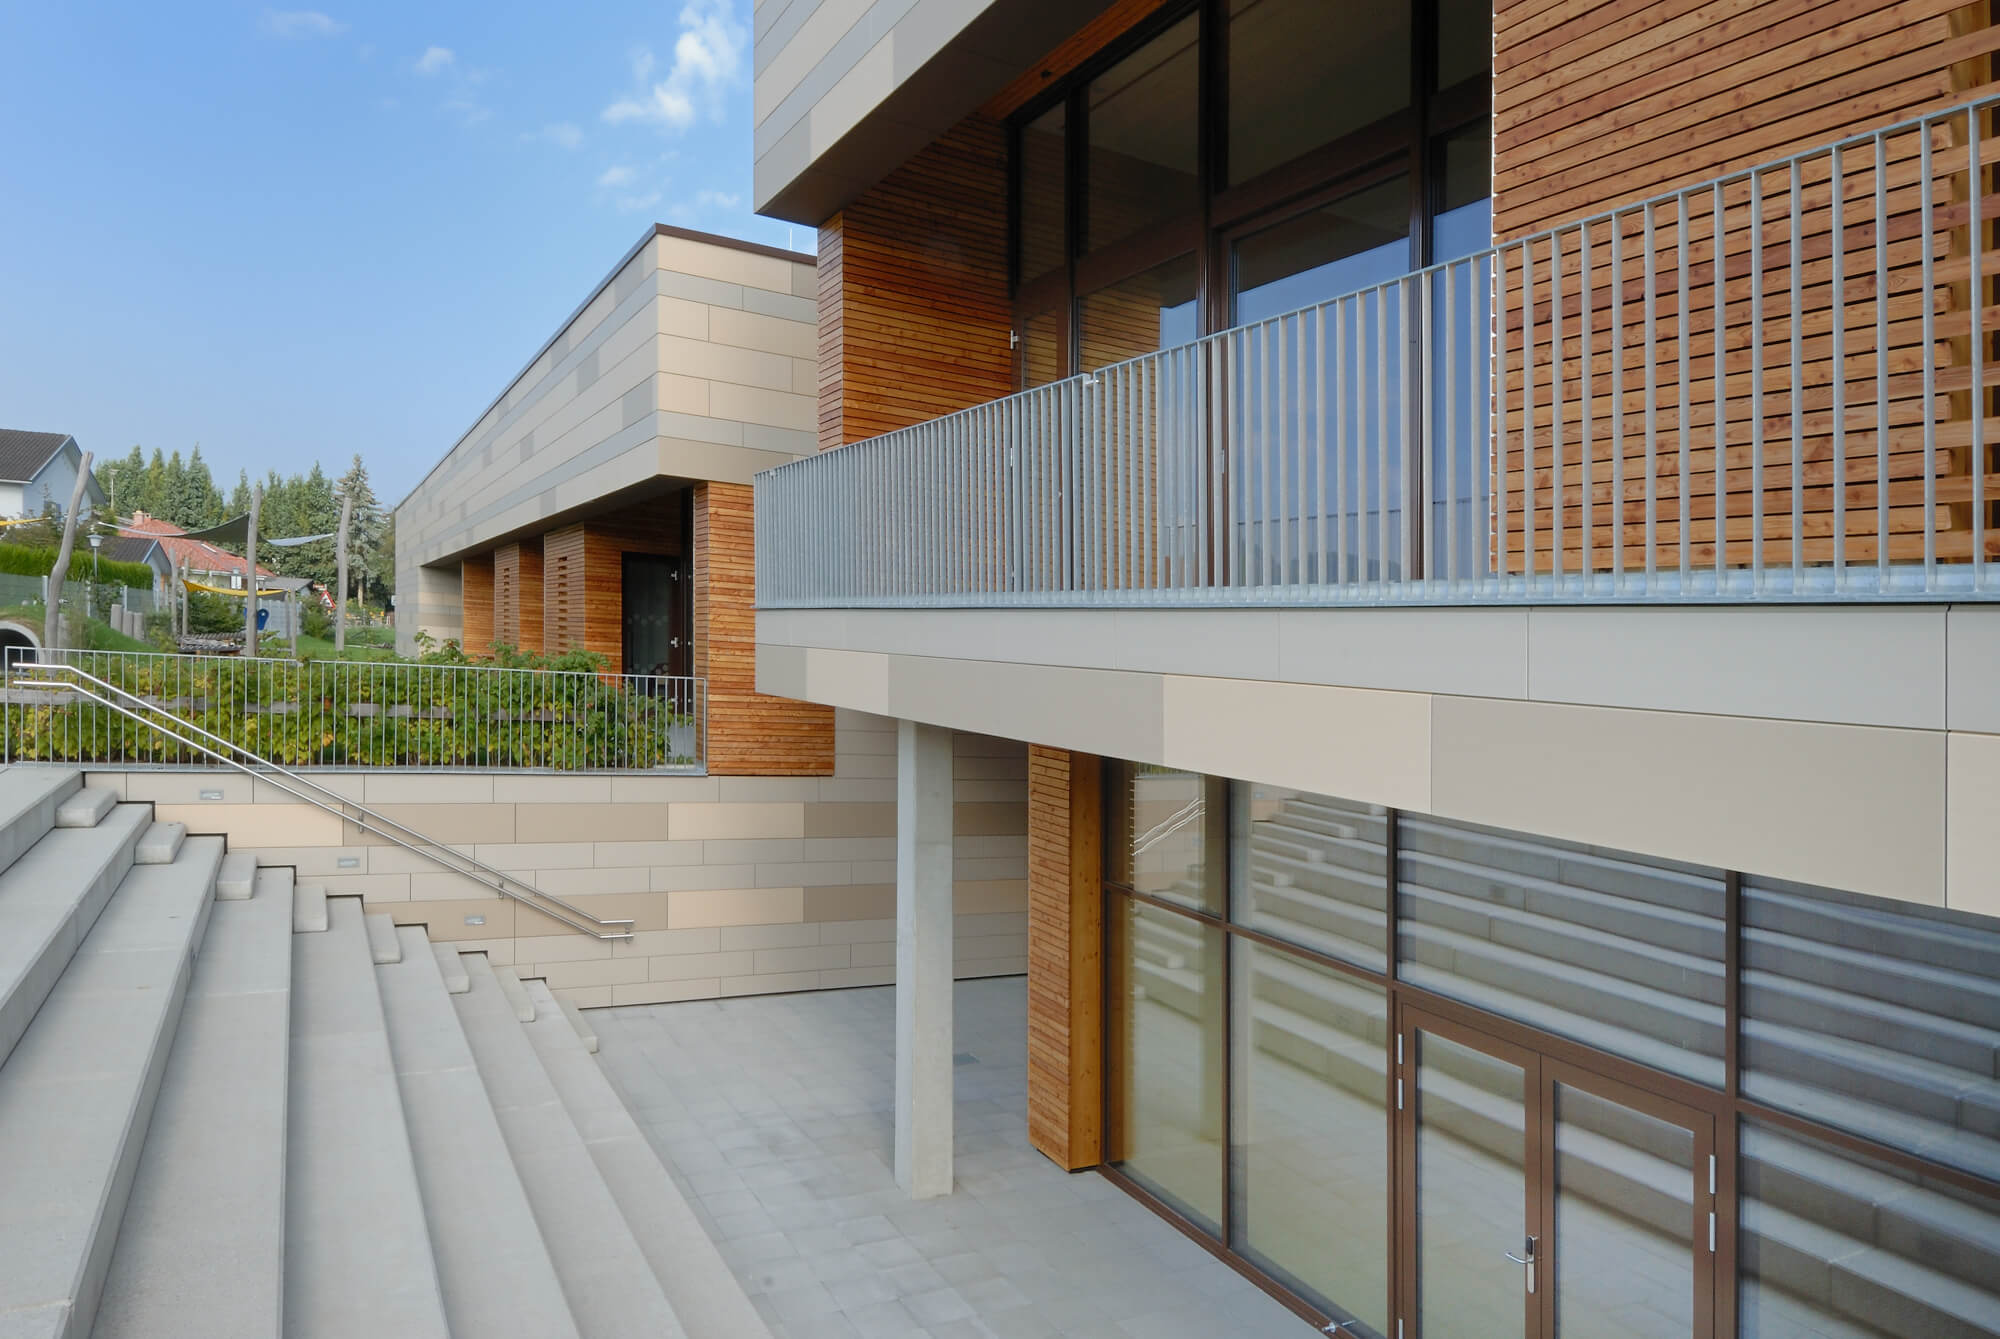 Tonality Referenz: Keramik Fassade Kinderhaus Pertinsel Treppe - moderne und nachhaltige Architektur mit roter Tonality Fassade und eleganten Stufen